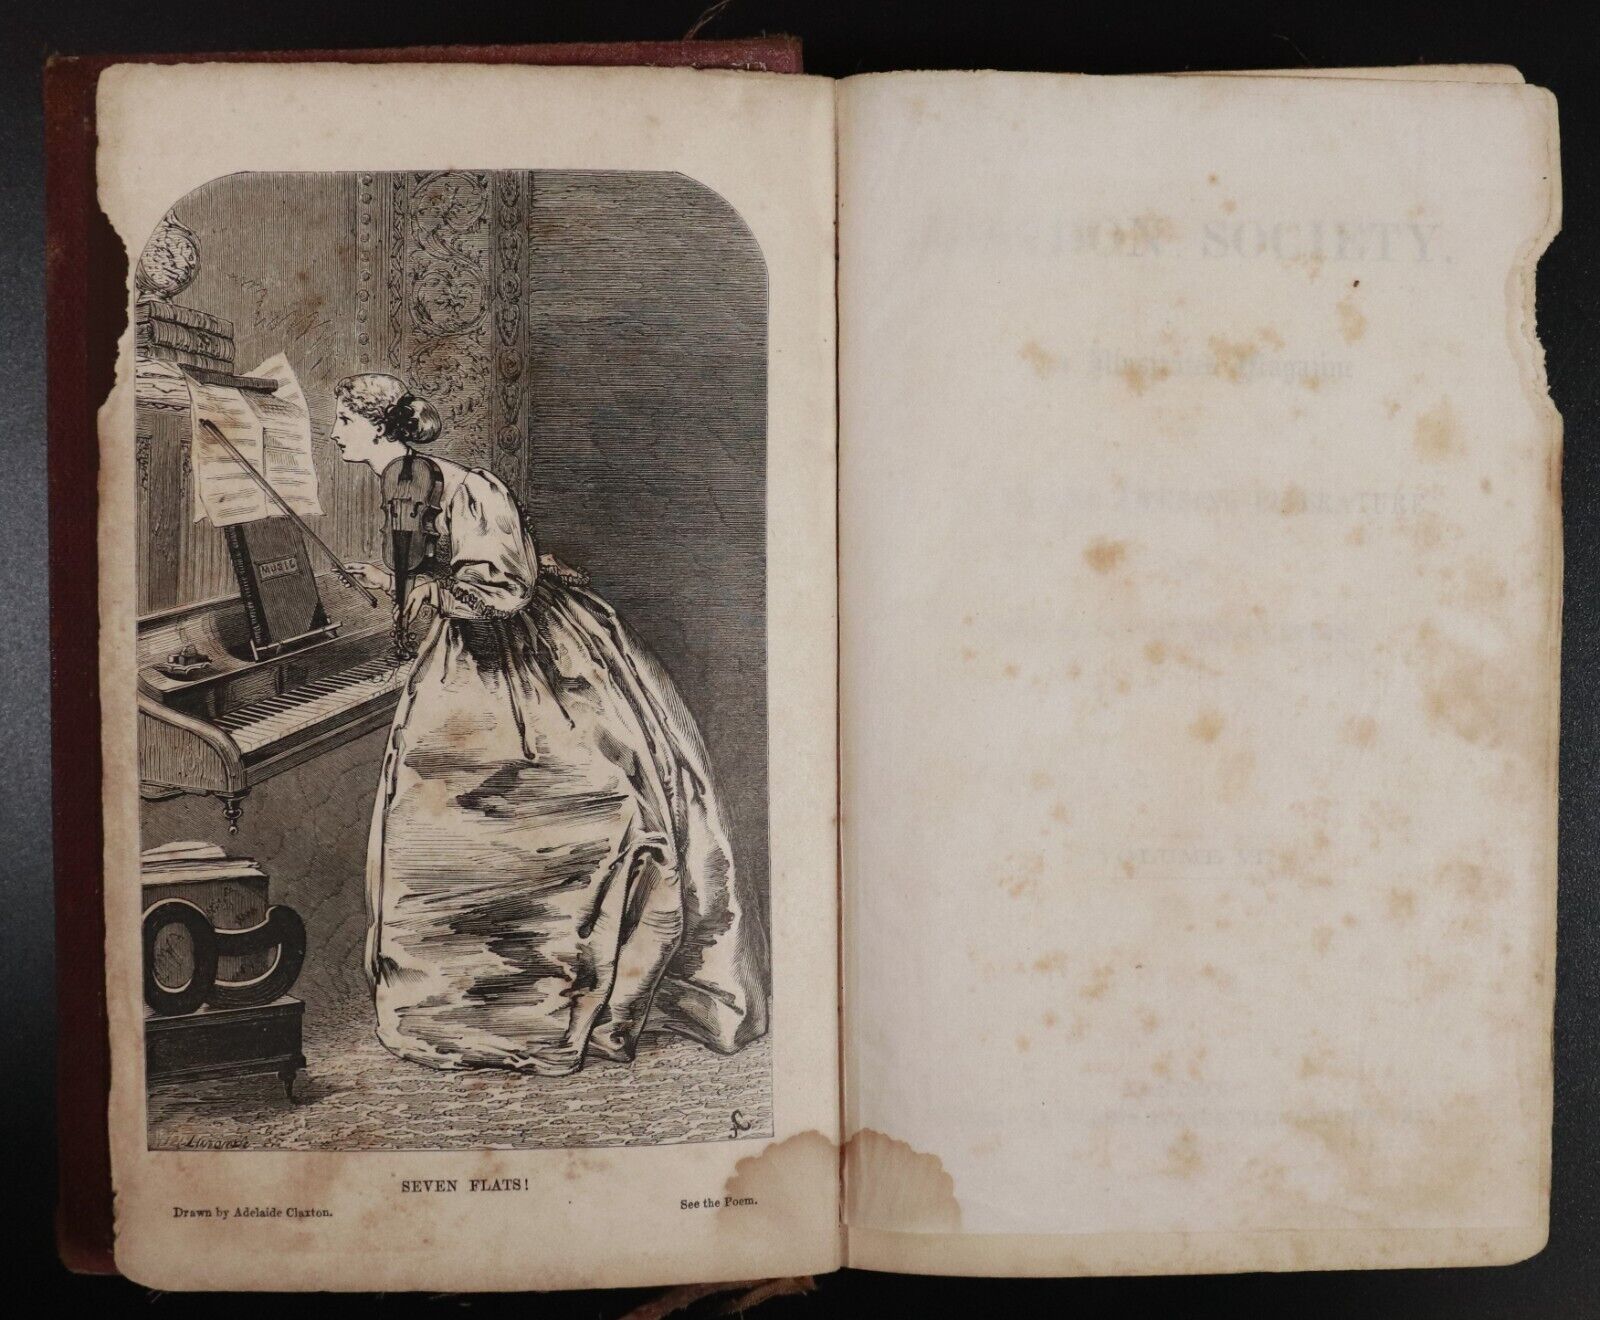 1862 & 1864 London Society Illustrated Magazine Antique Literature Books